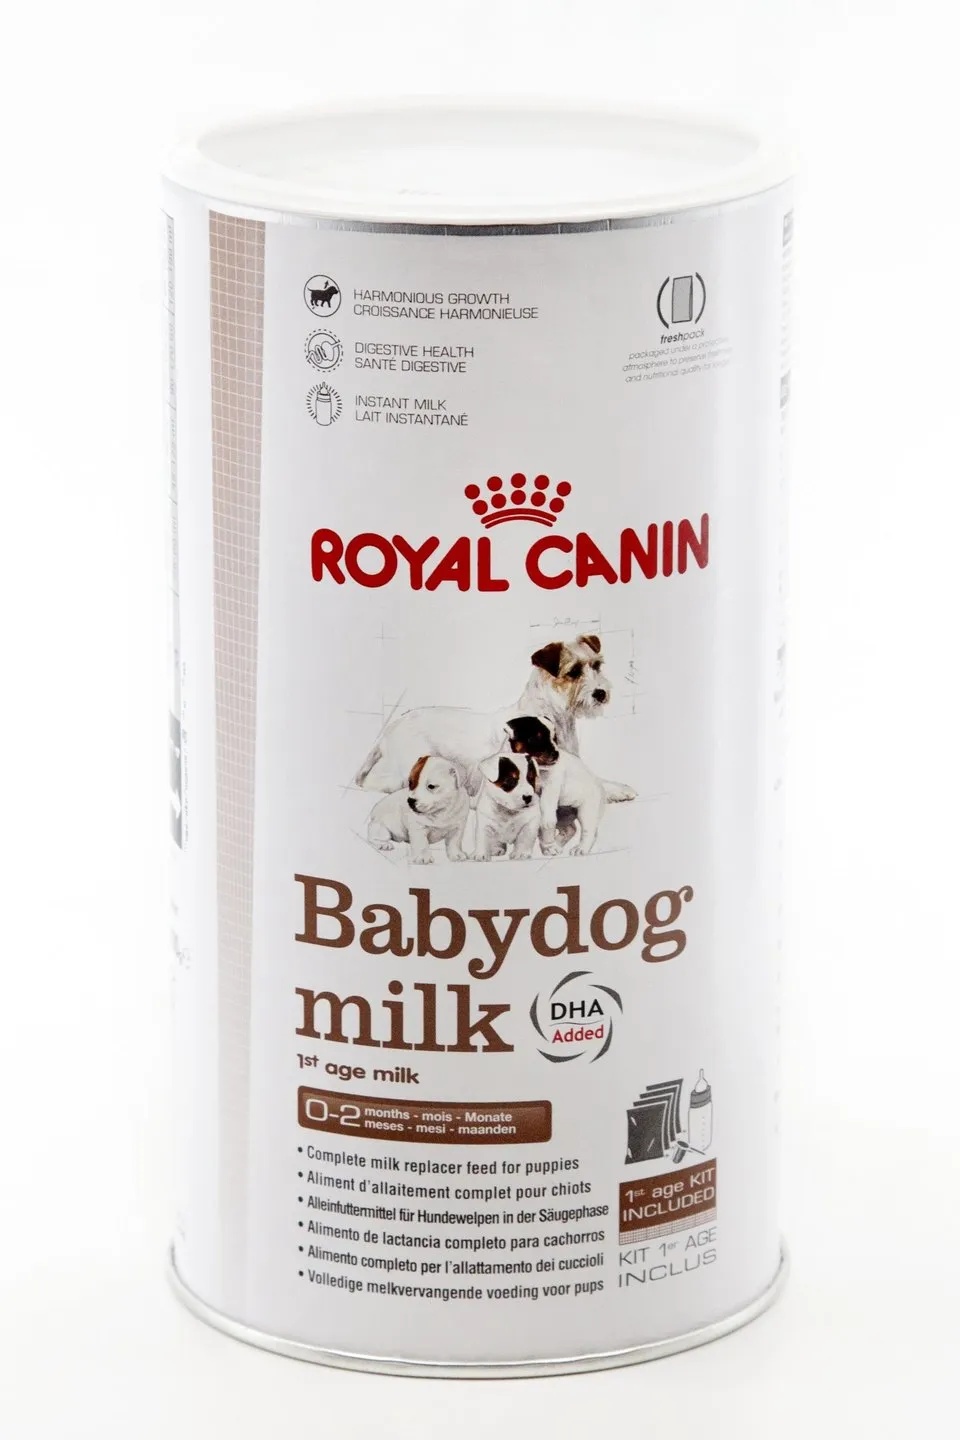 royal canin babydog